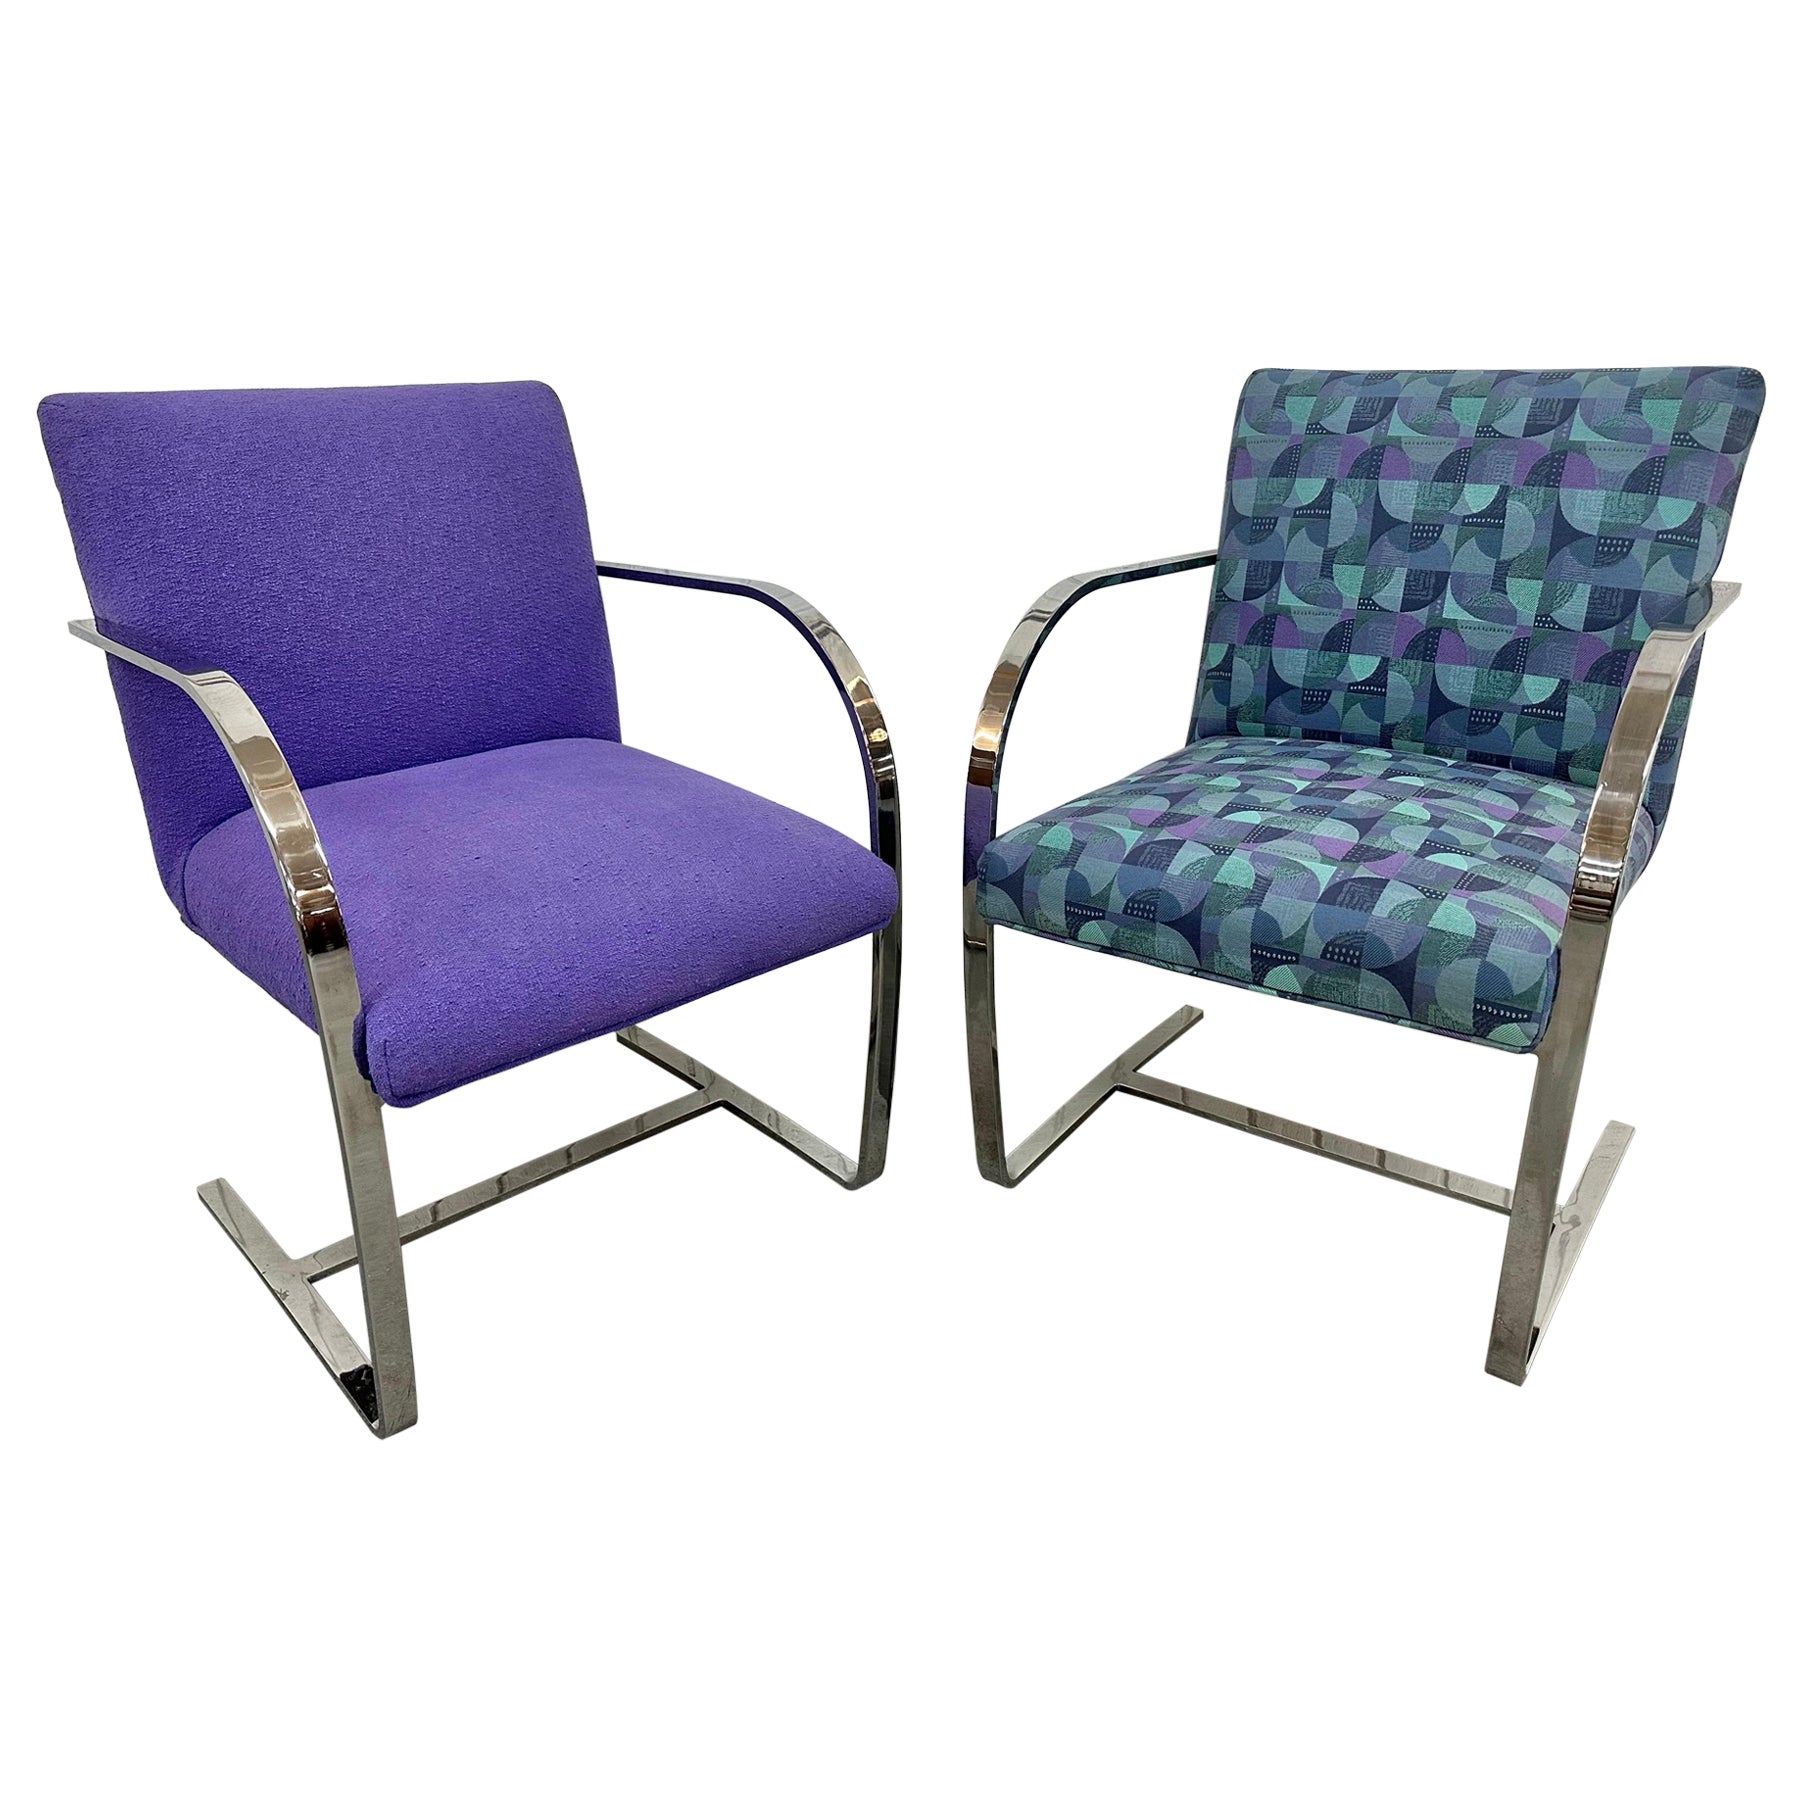 Vintage Modern Bruno Chrome Arm Chairs - Set of 2